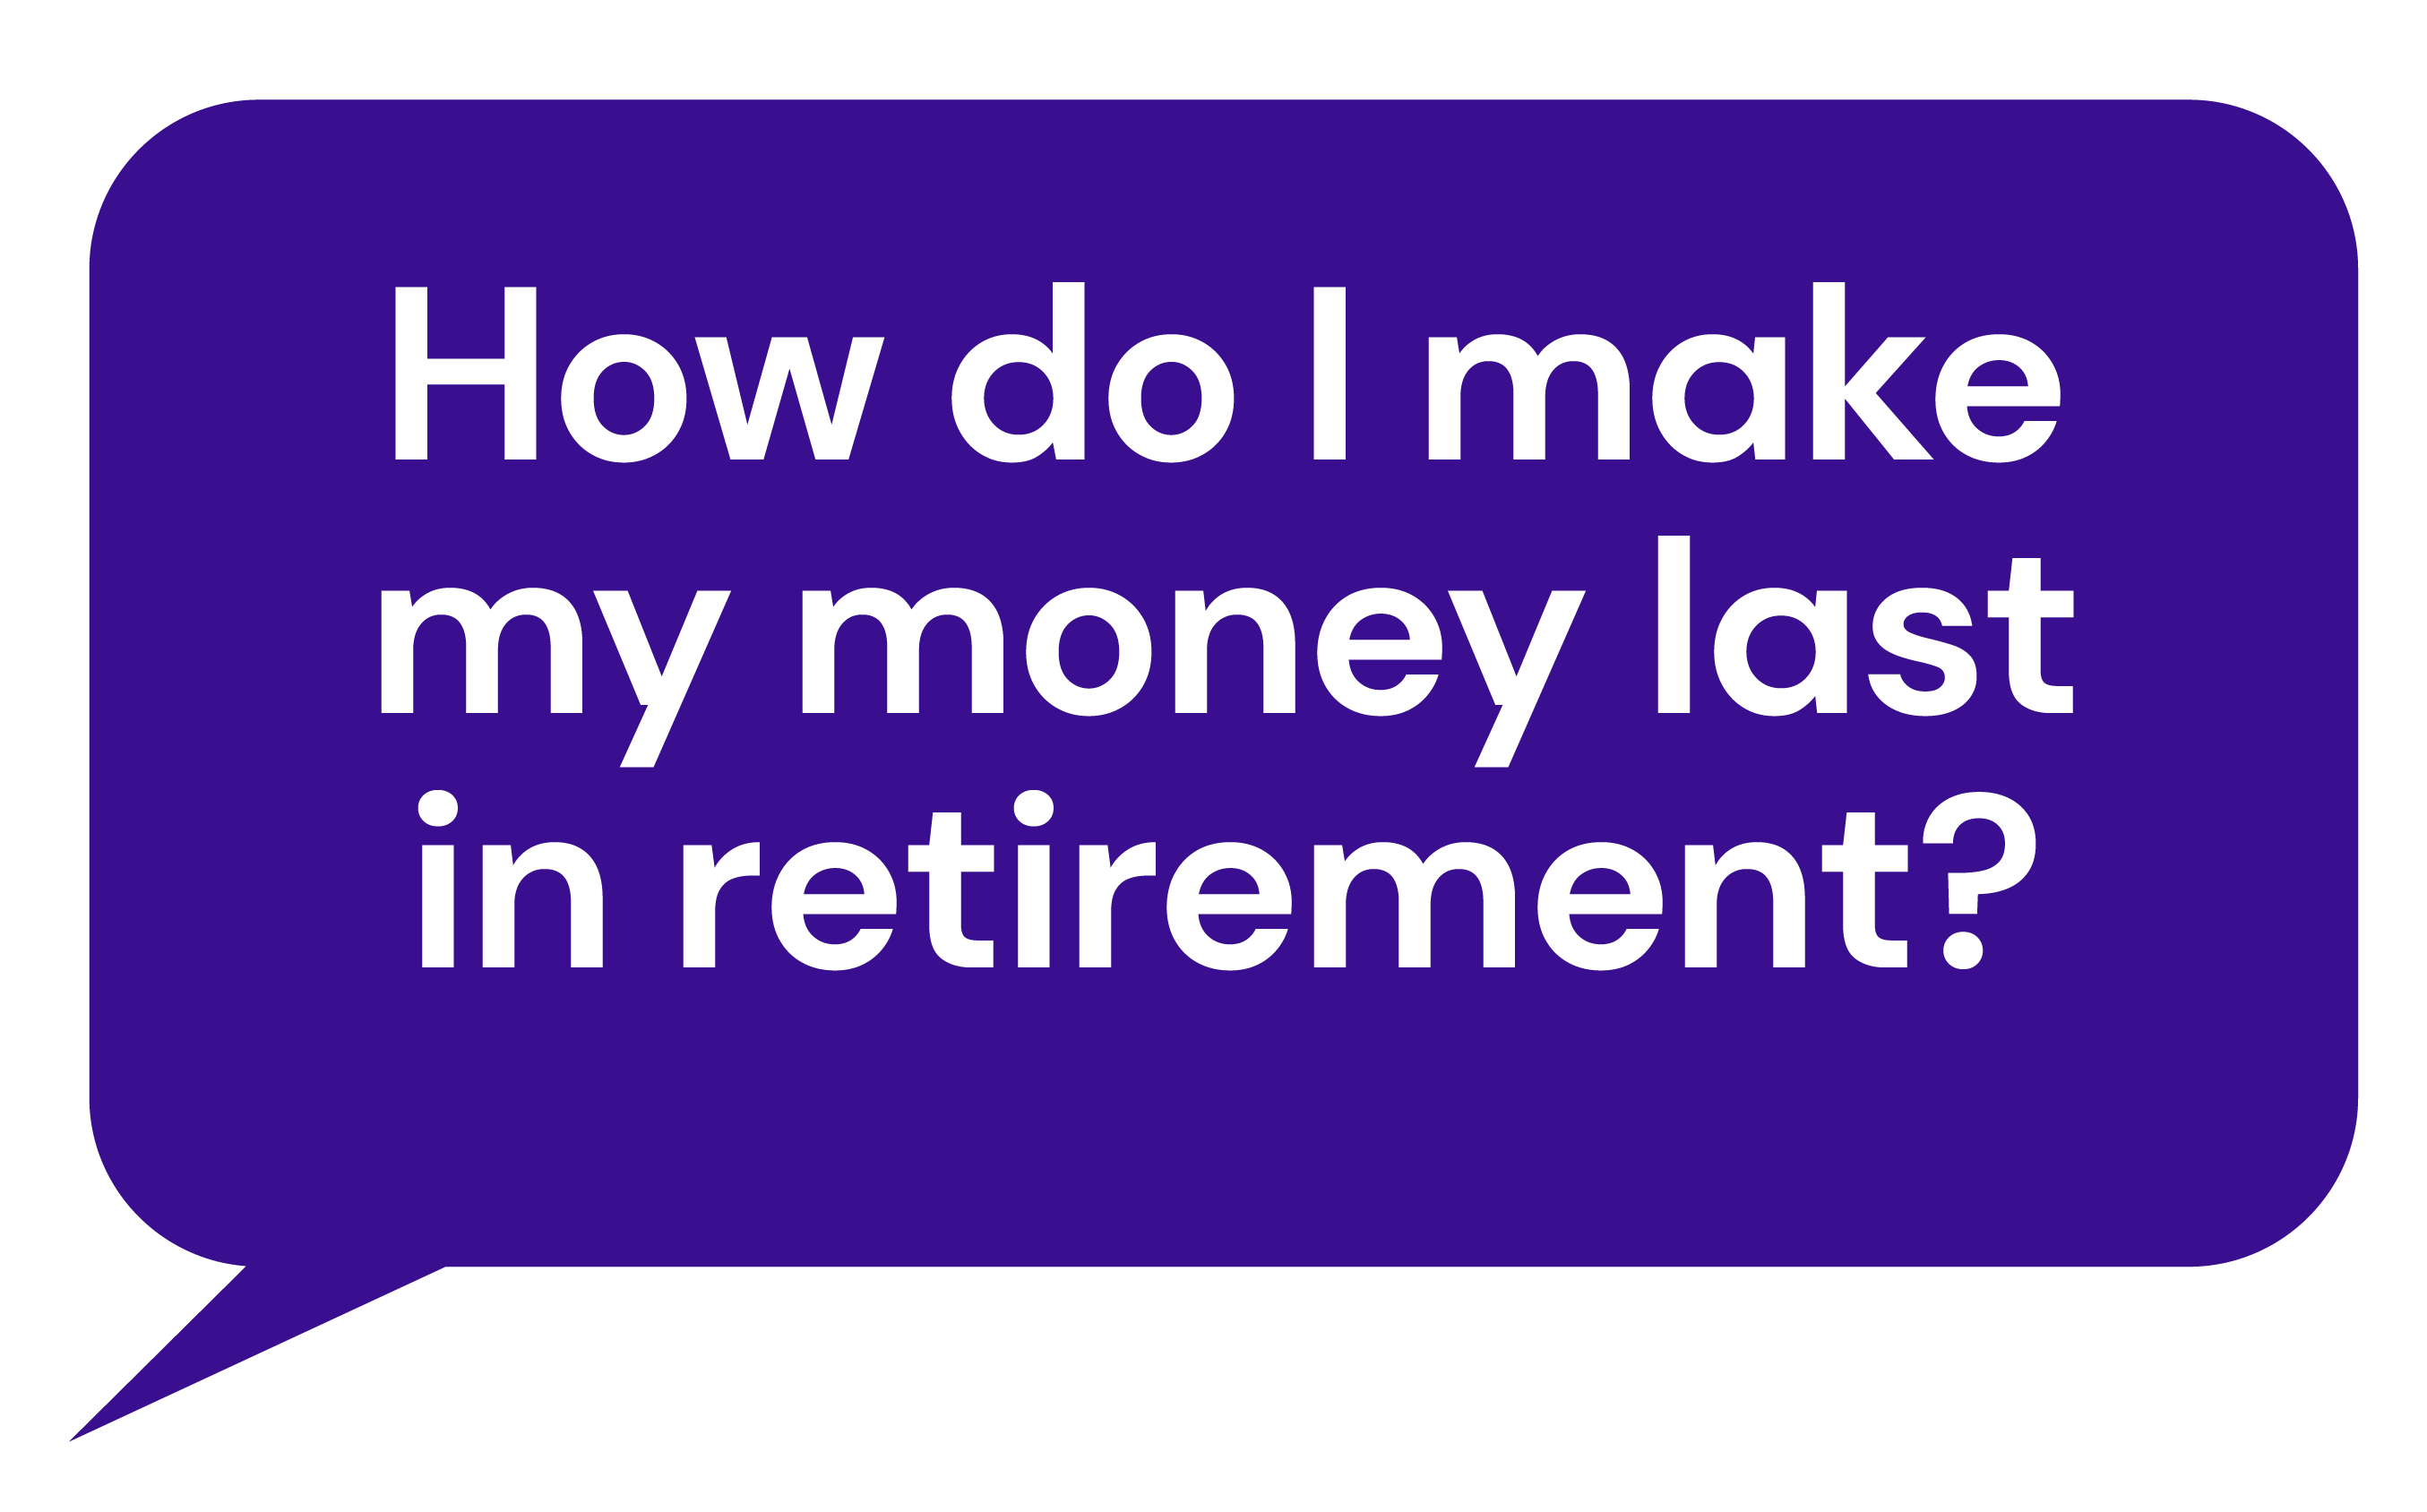 How do I make my money last in retirement?